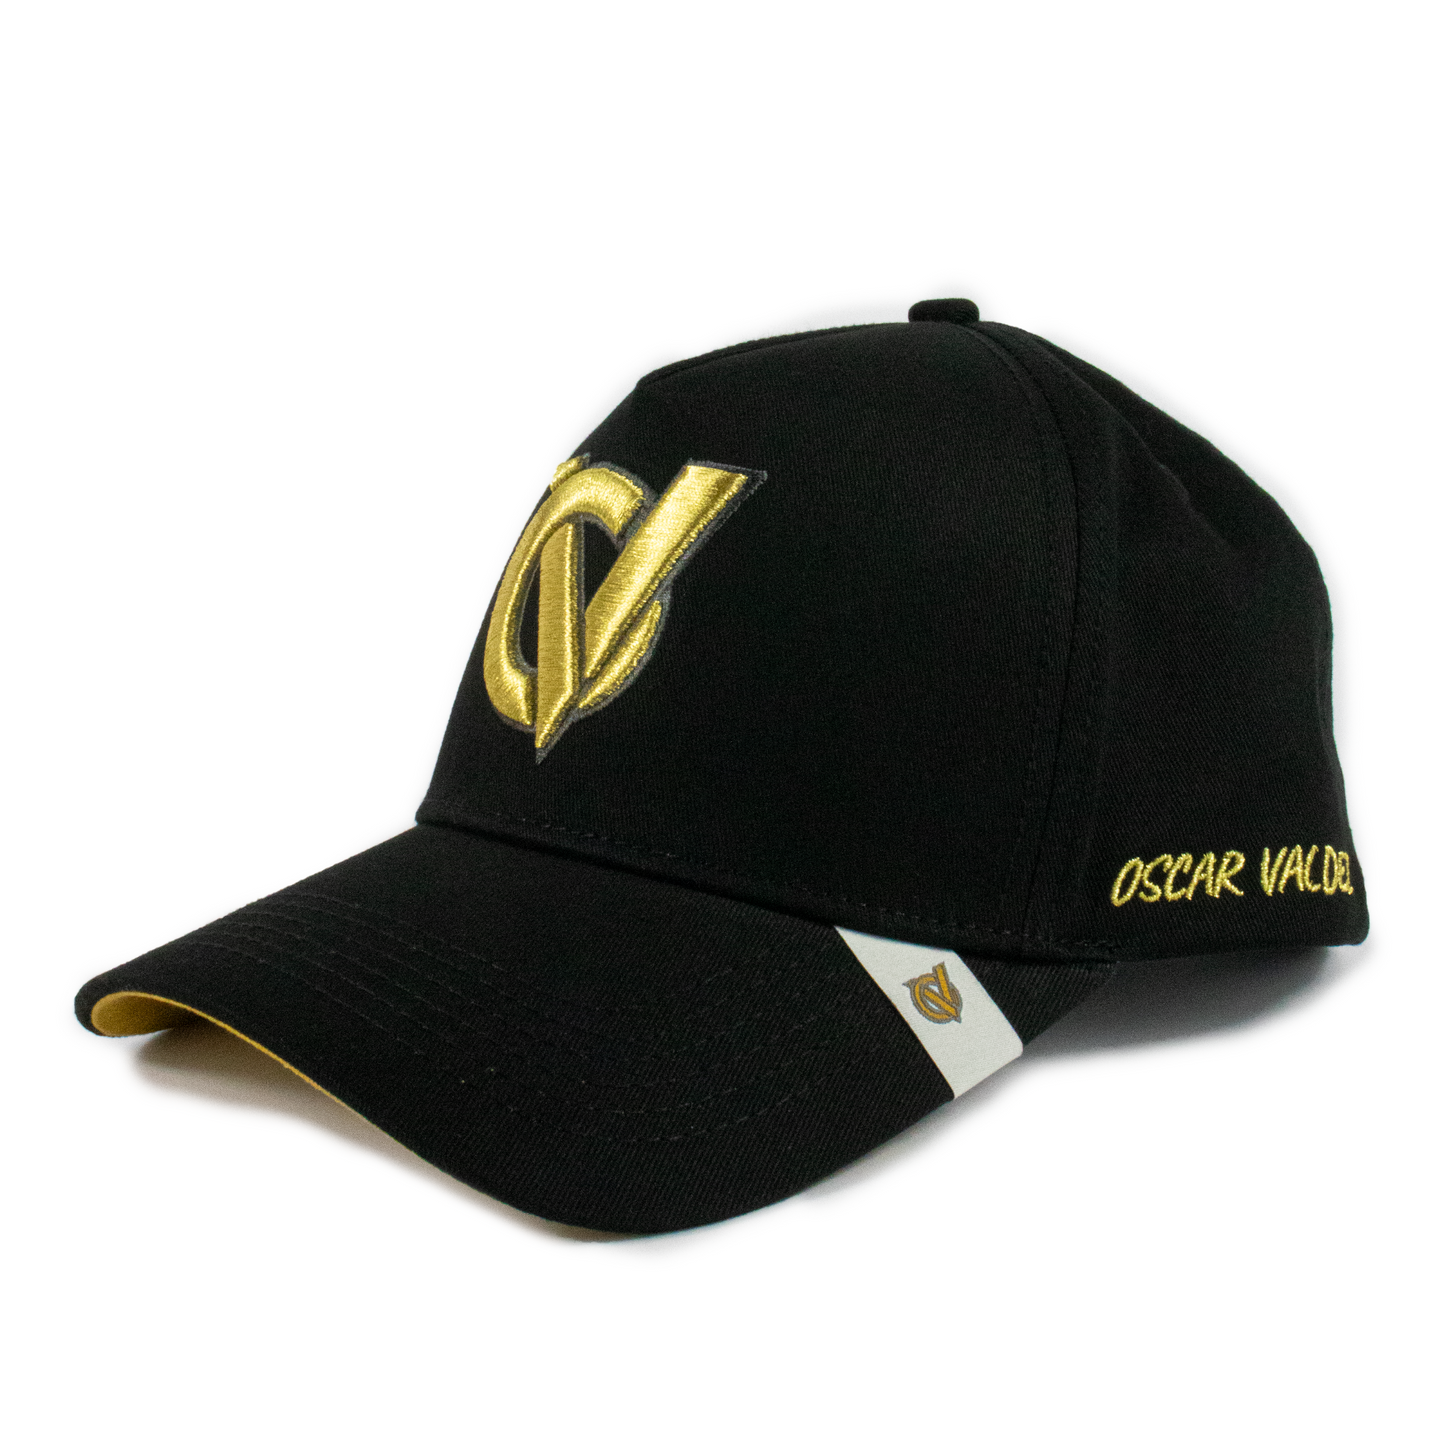 The Gold OV Hat